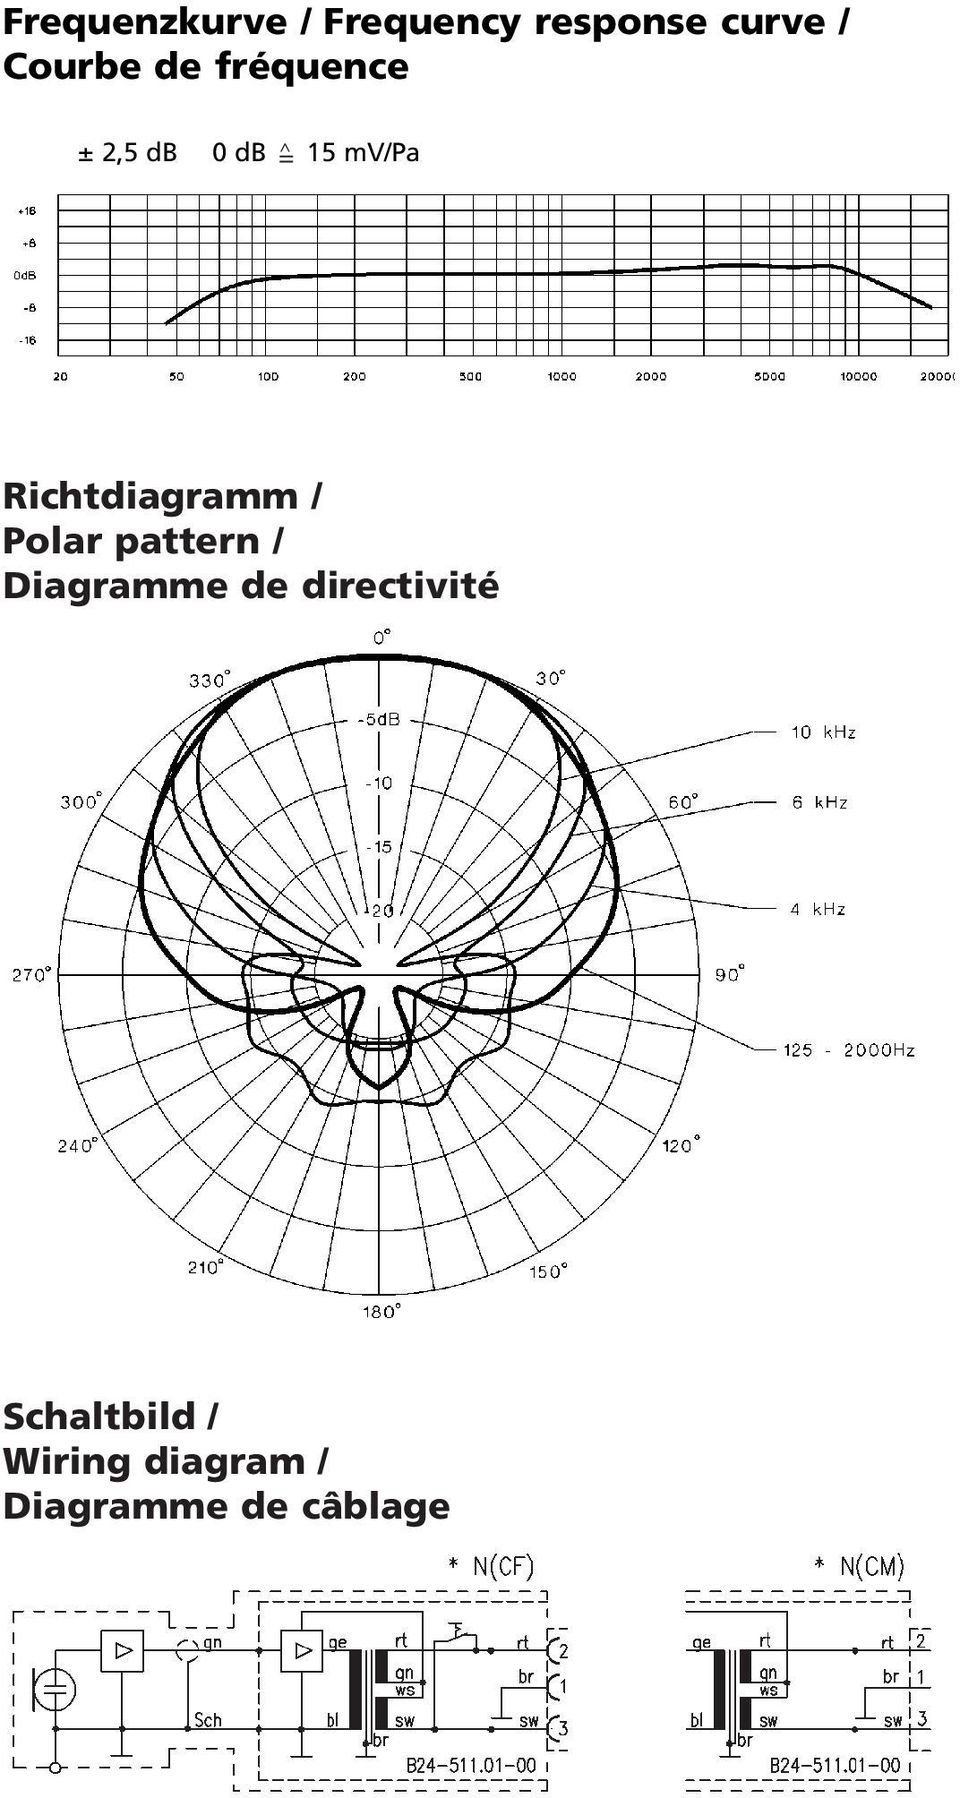 Richtdiagramm / Polar pattern / Diagramme de